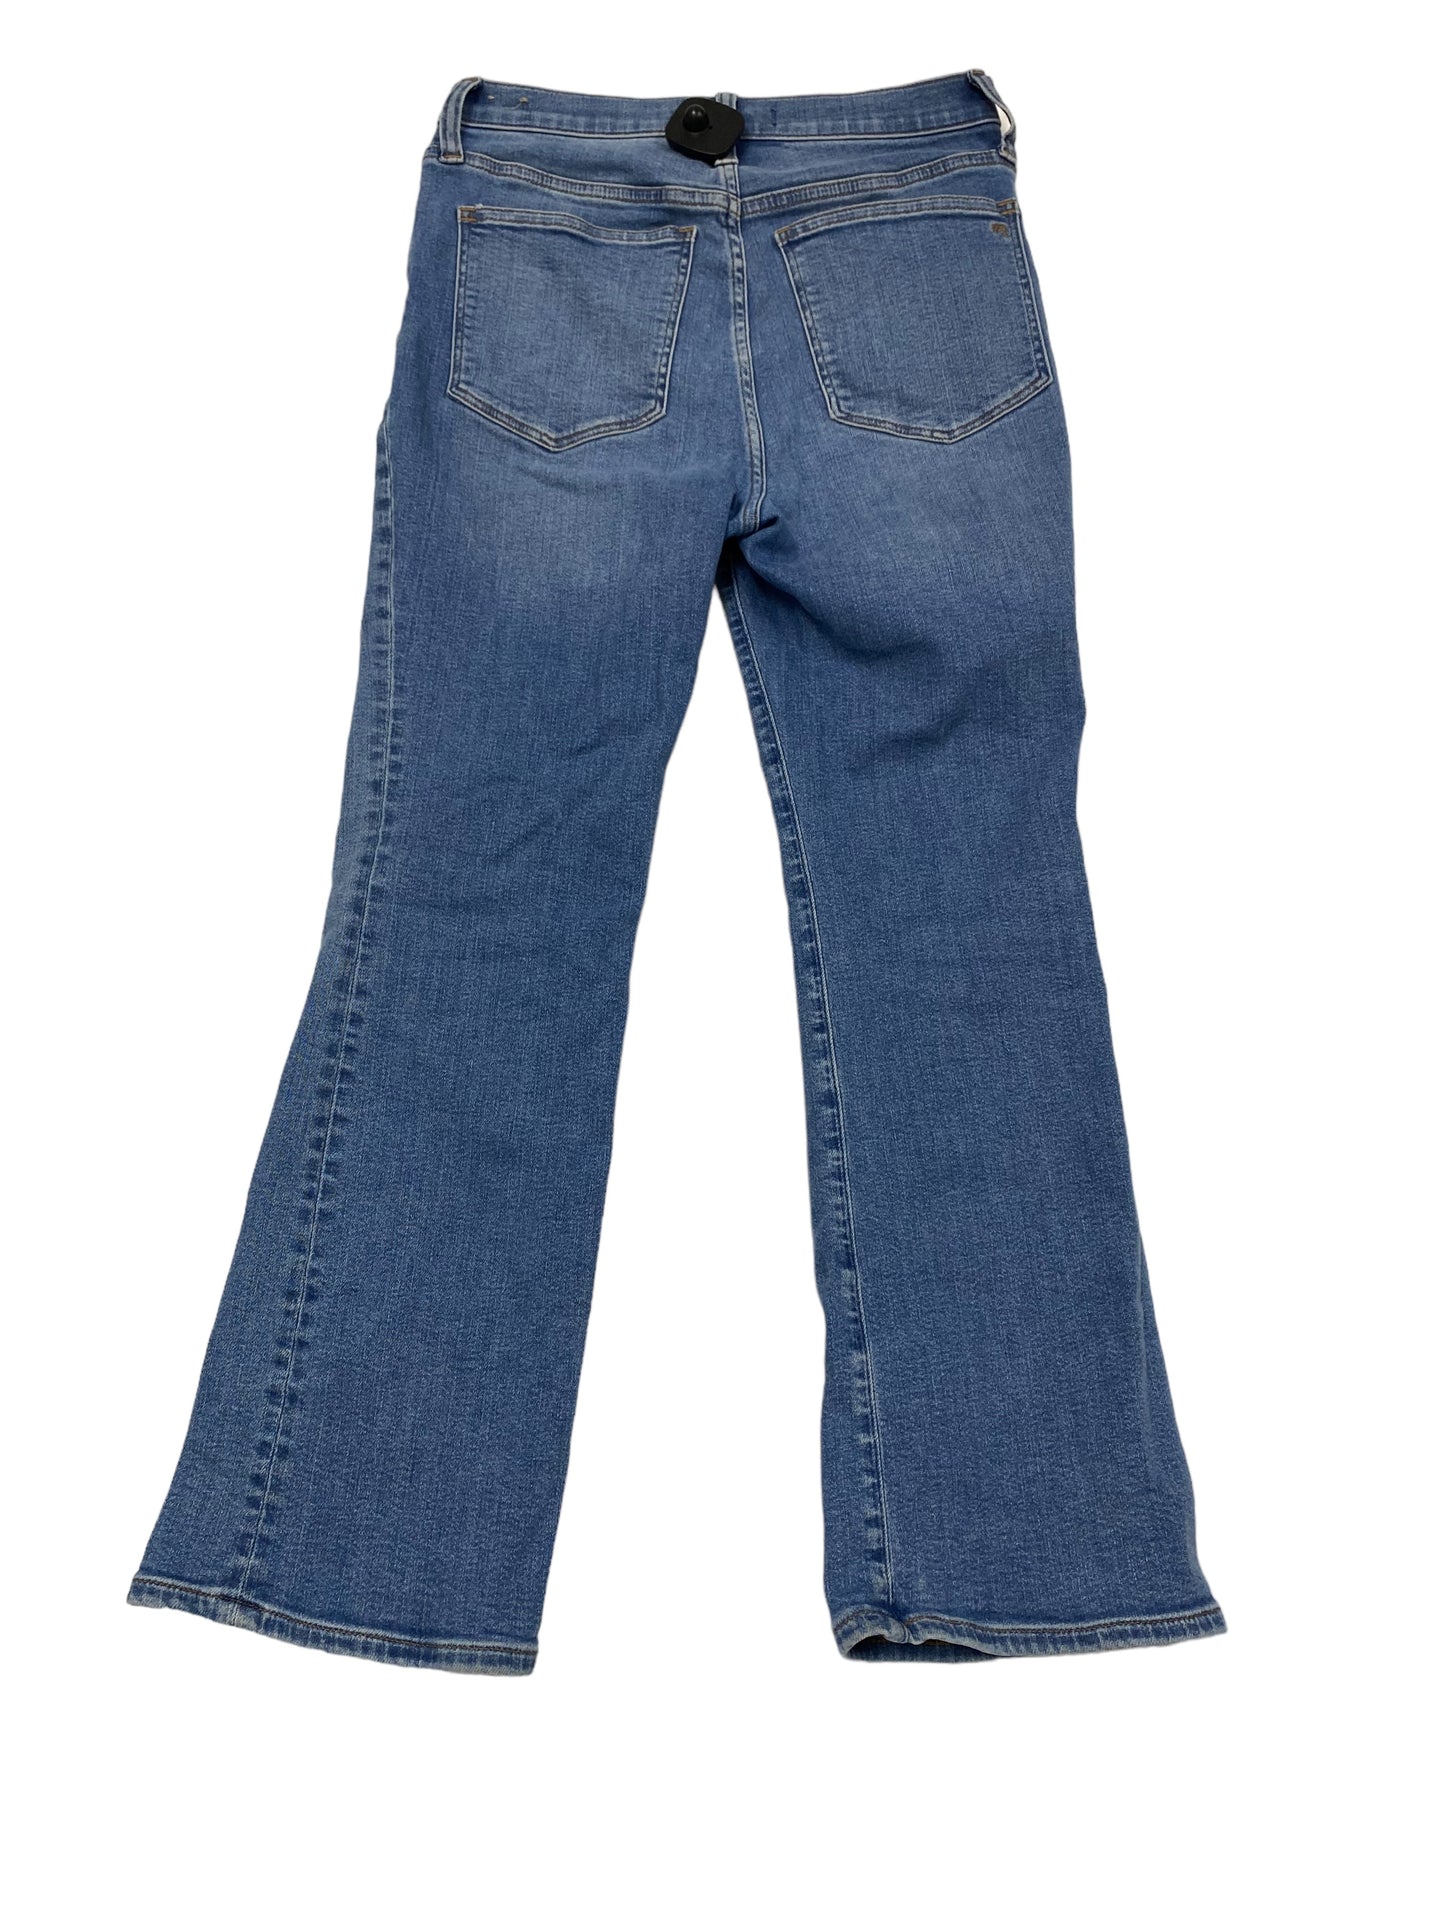 Blue Denim Jeans Boot Cut Madewell, Size 4